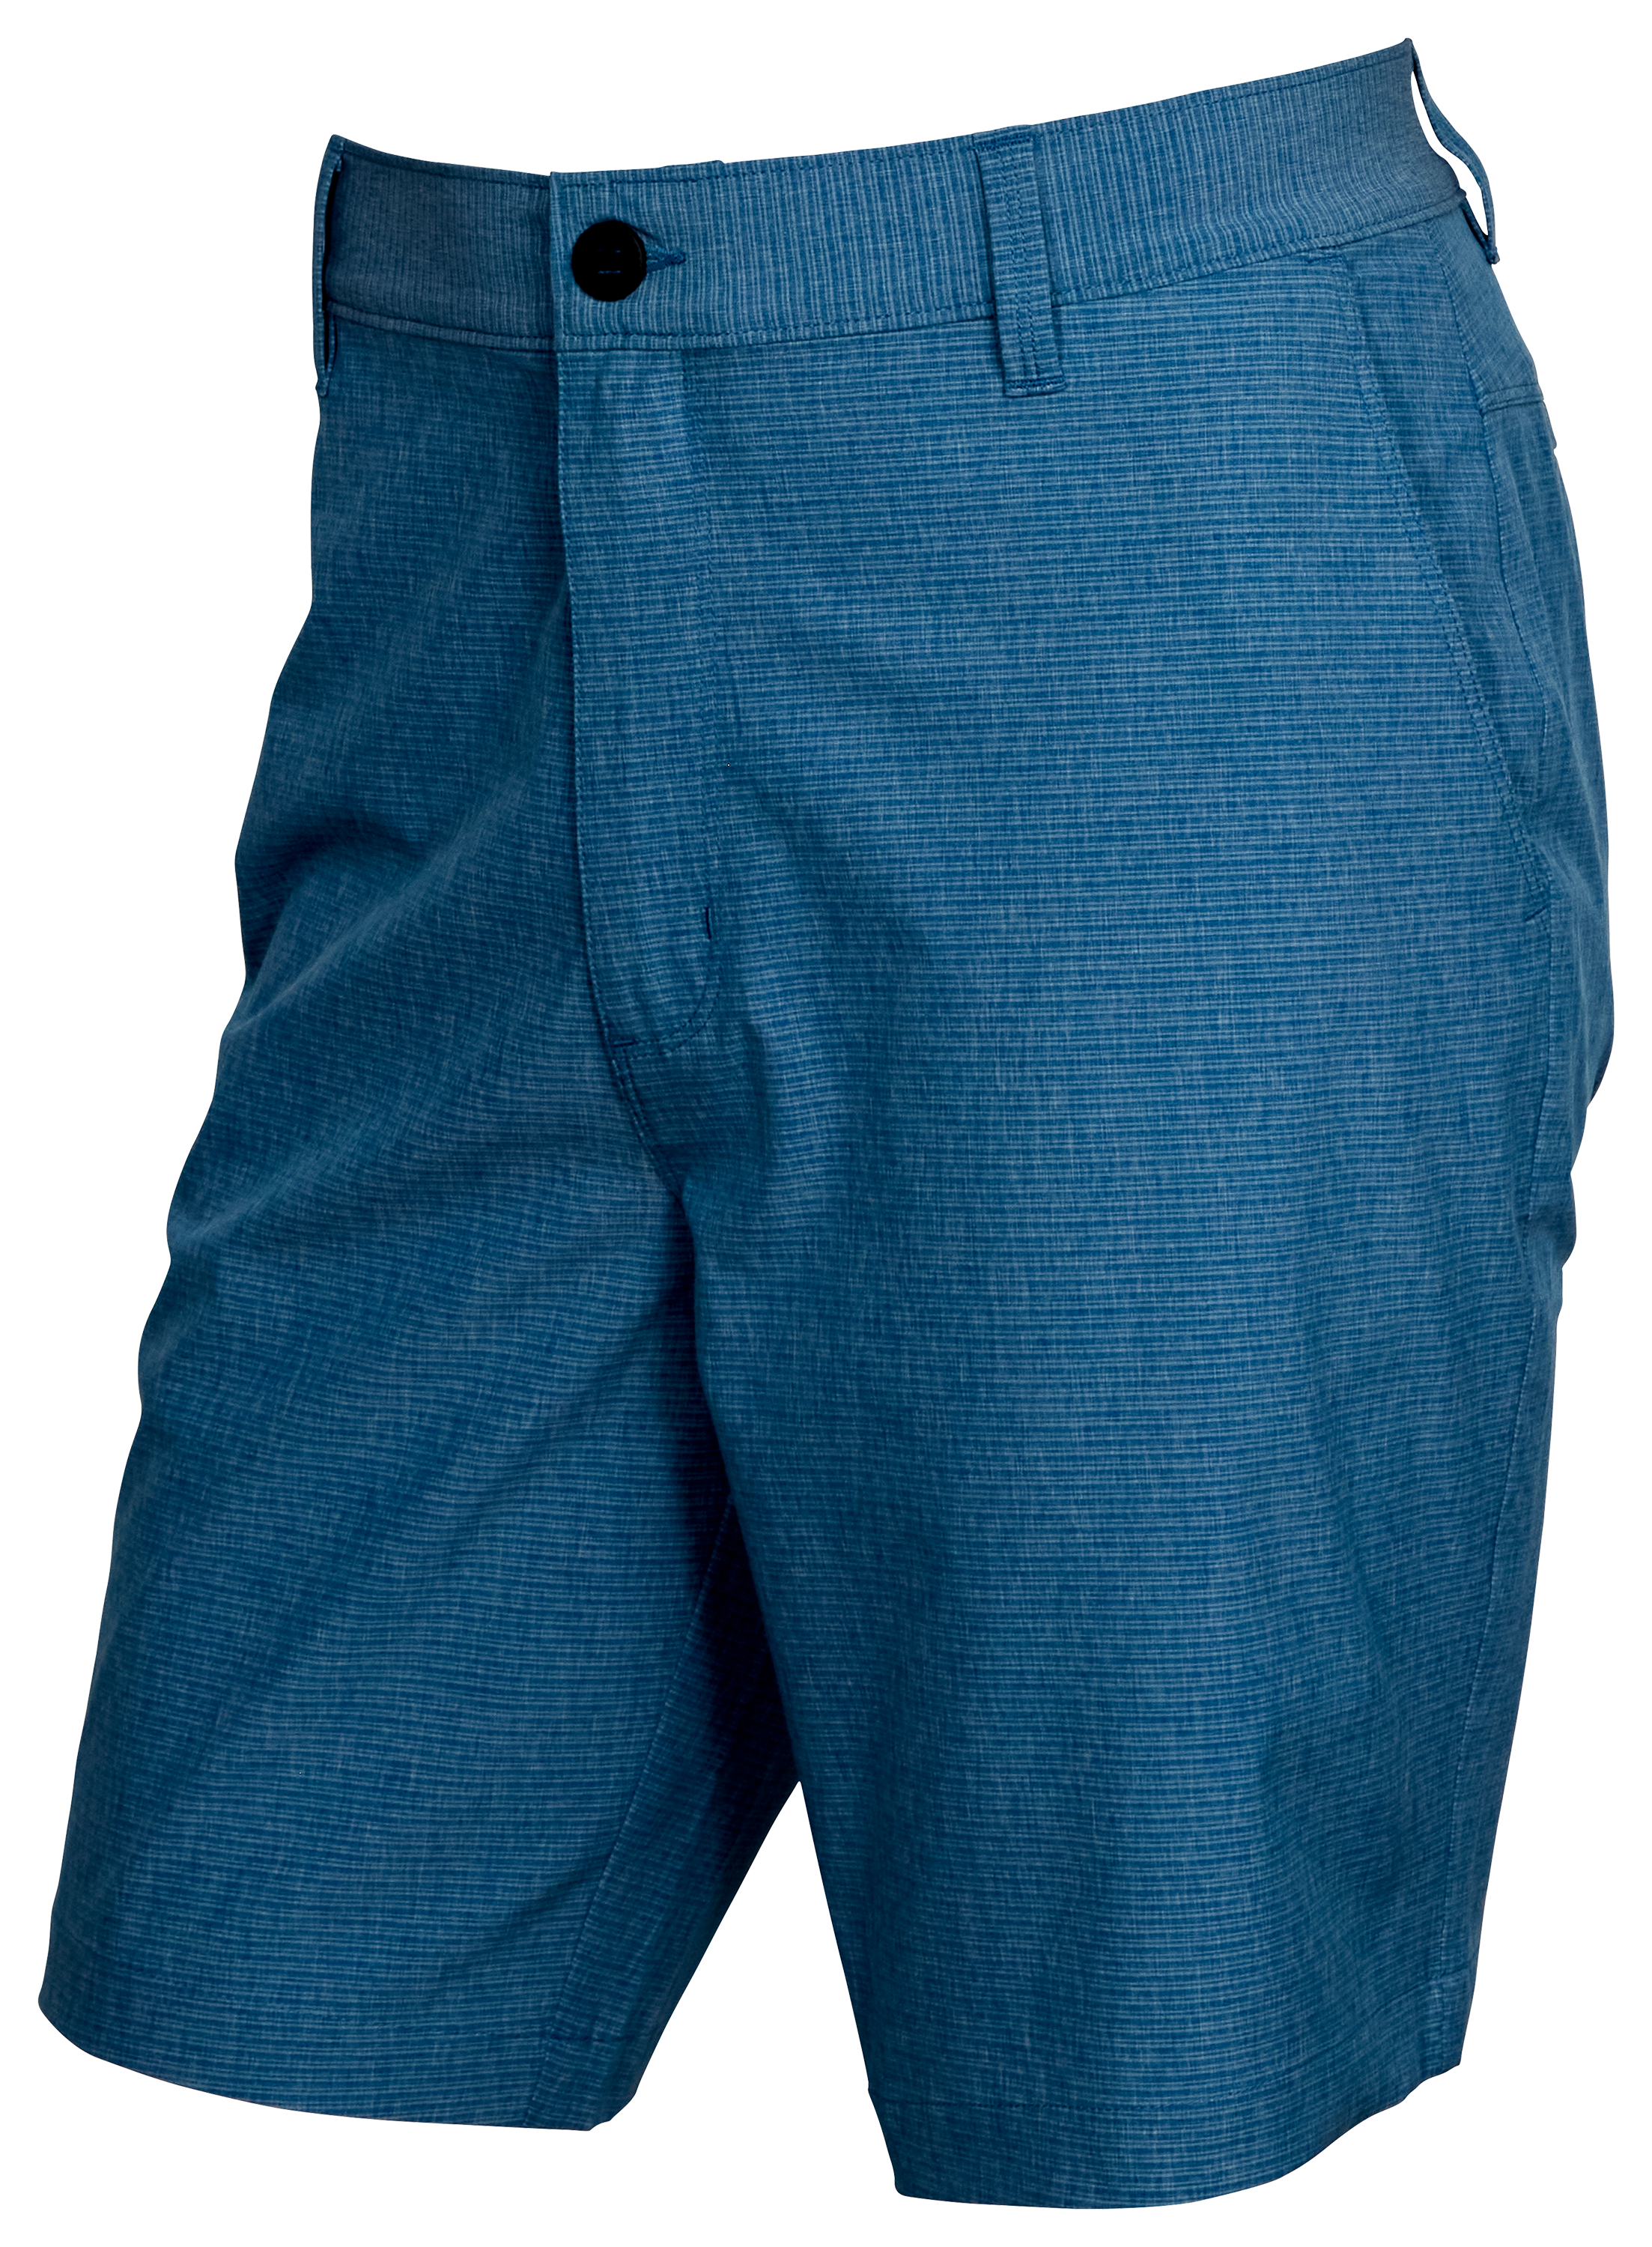 World Wide Sportsman Pescador Stretch Fishing Shorts for Men - Vallarta Blue Stripe - 44